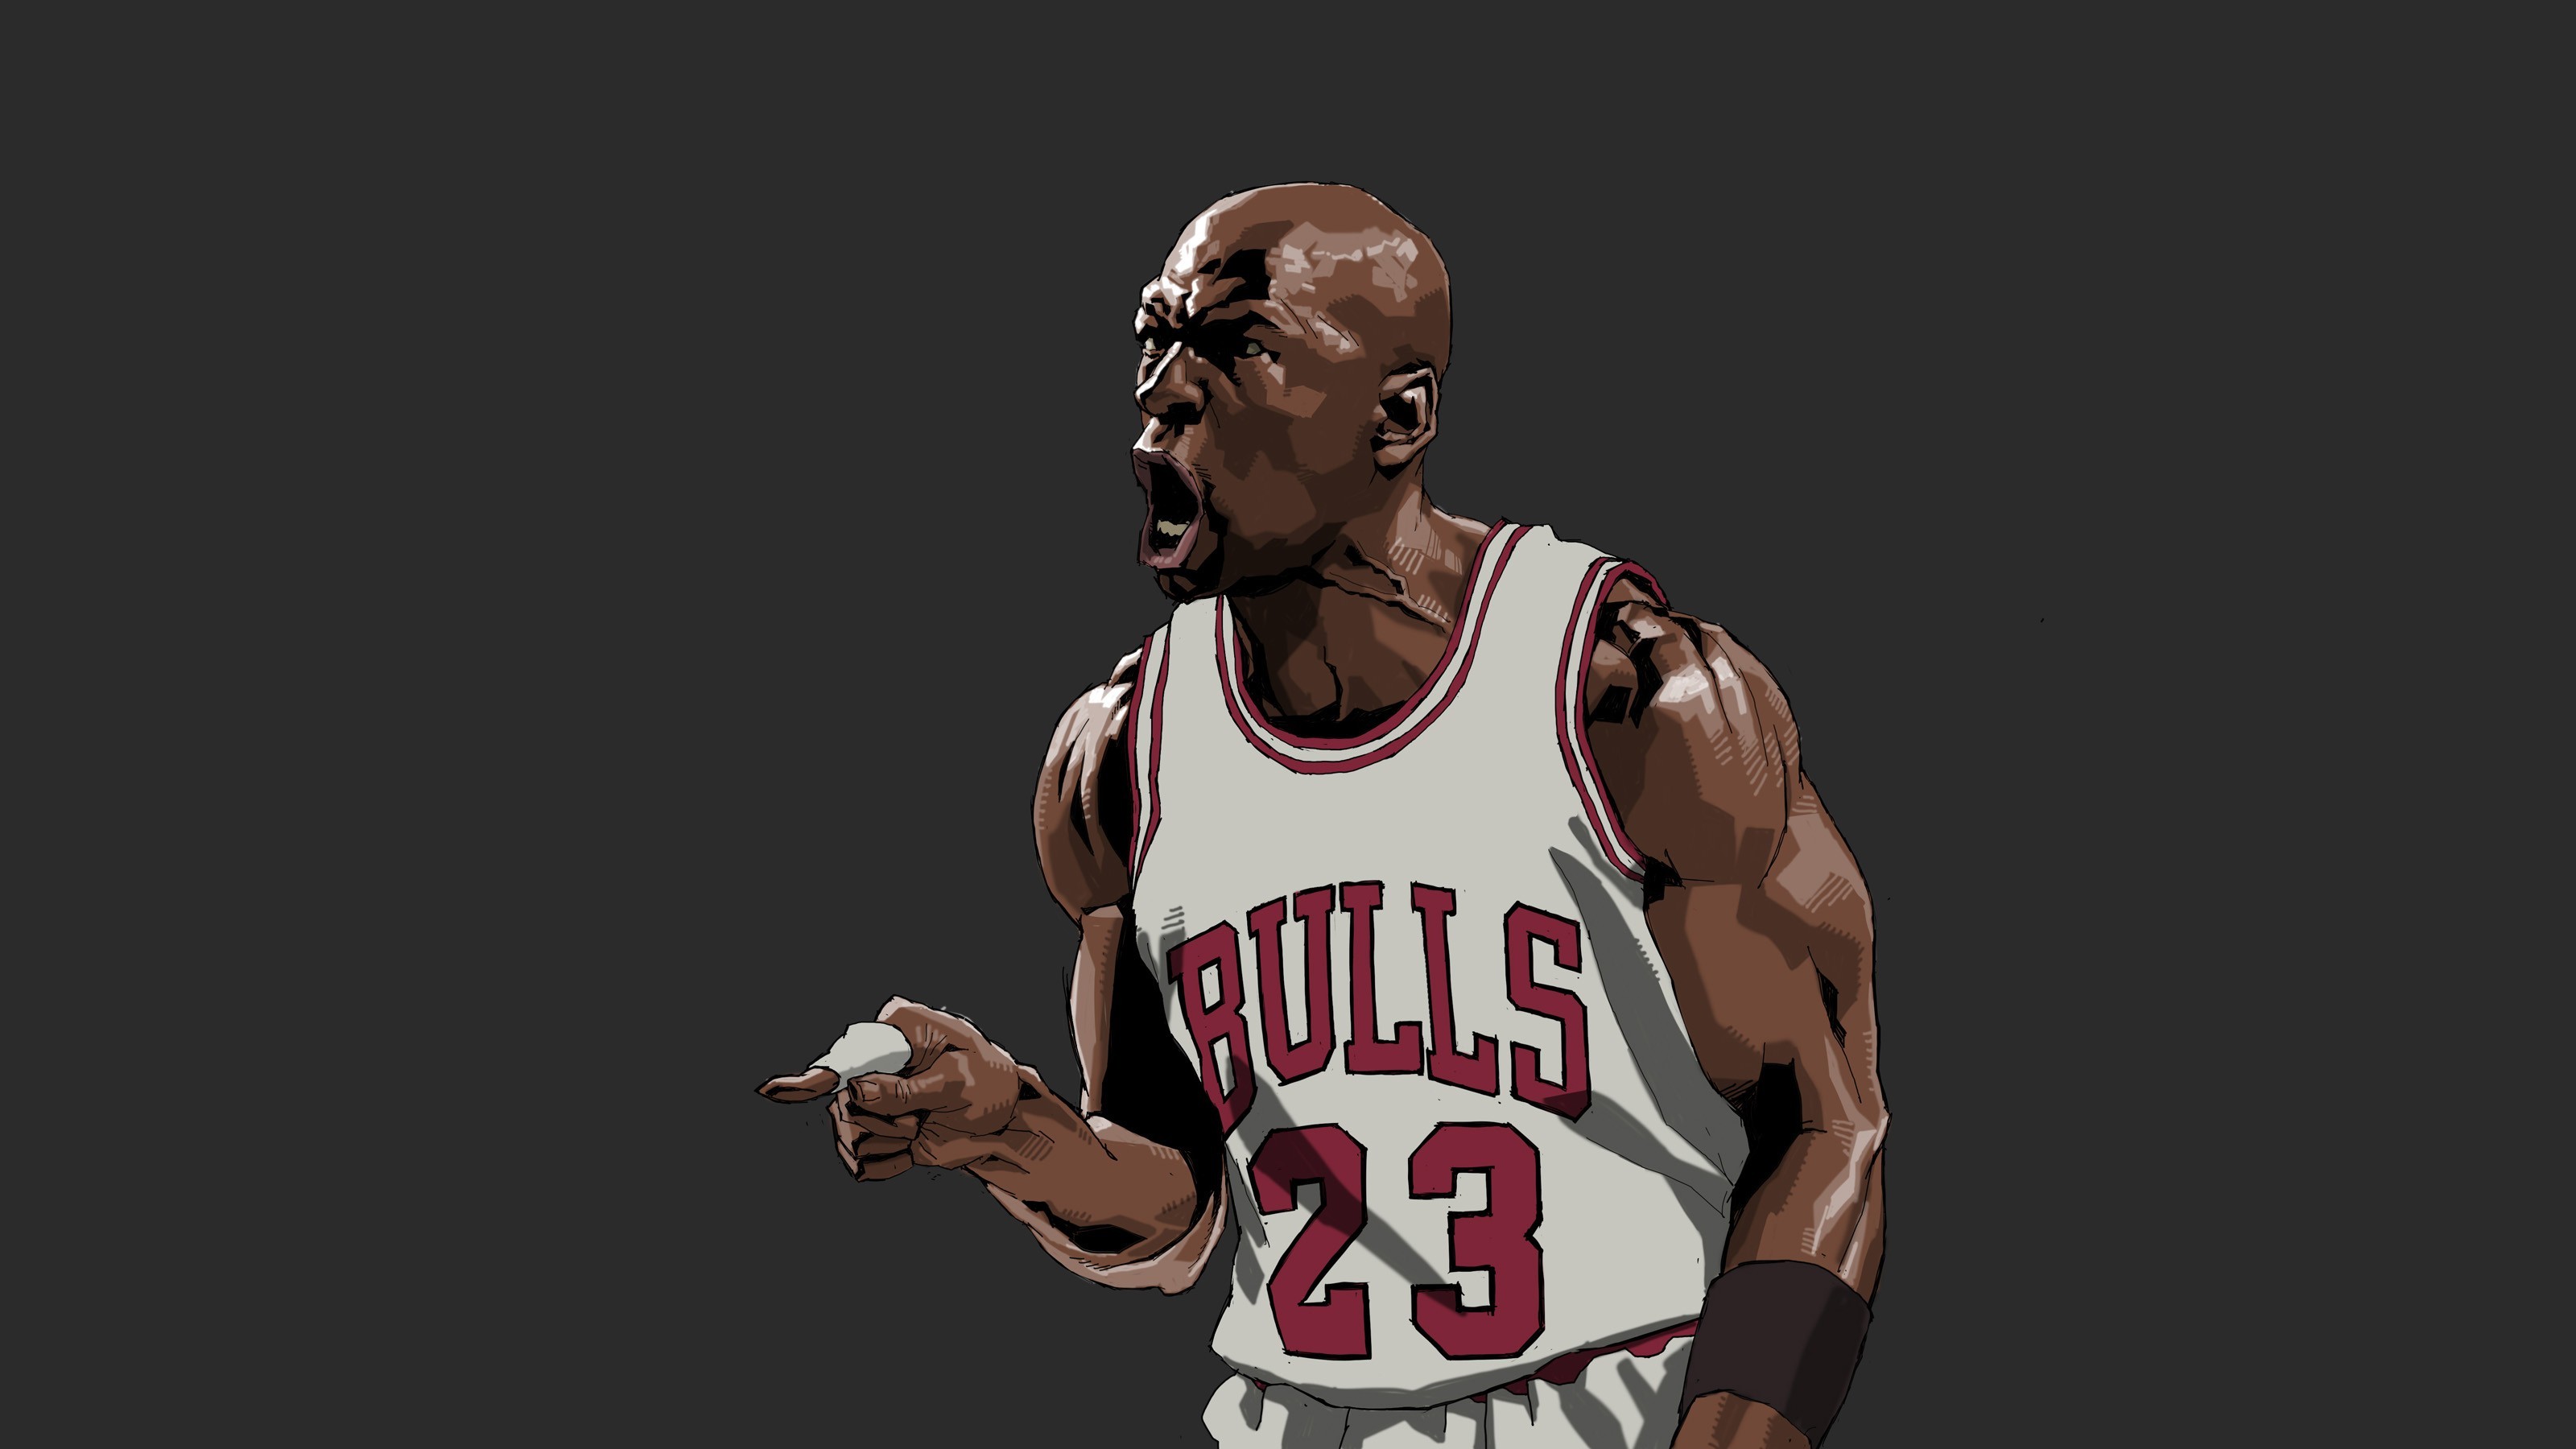 NBA, Michael Jordan Wallpapers HD / Desktop and Mobile Backgrounds